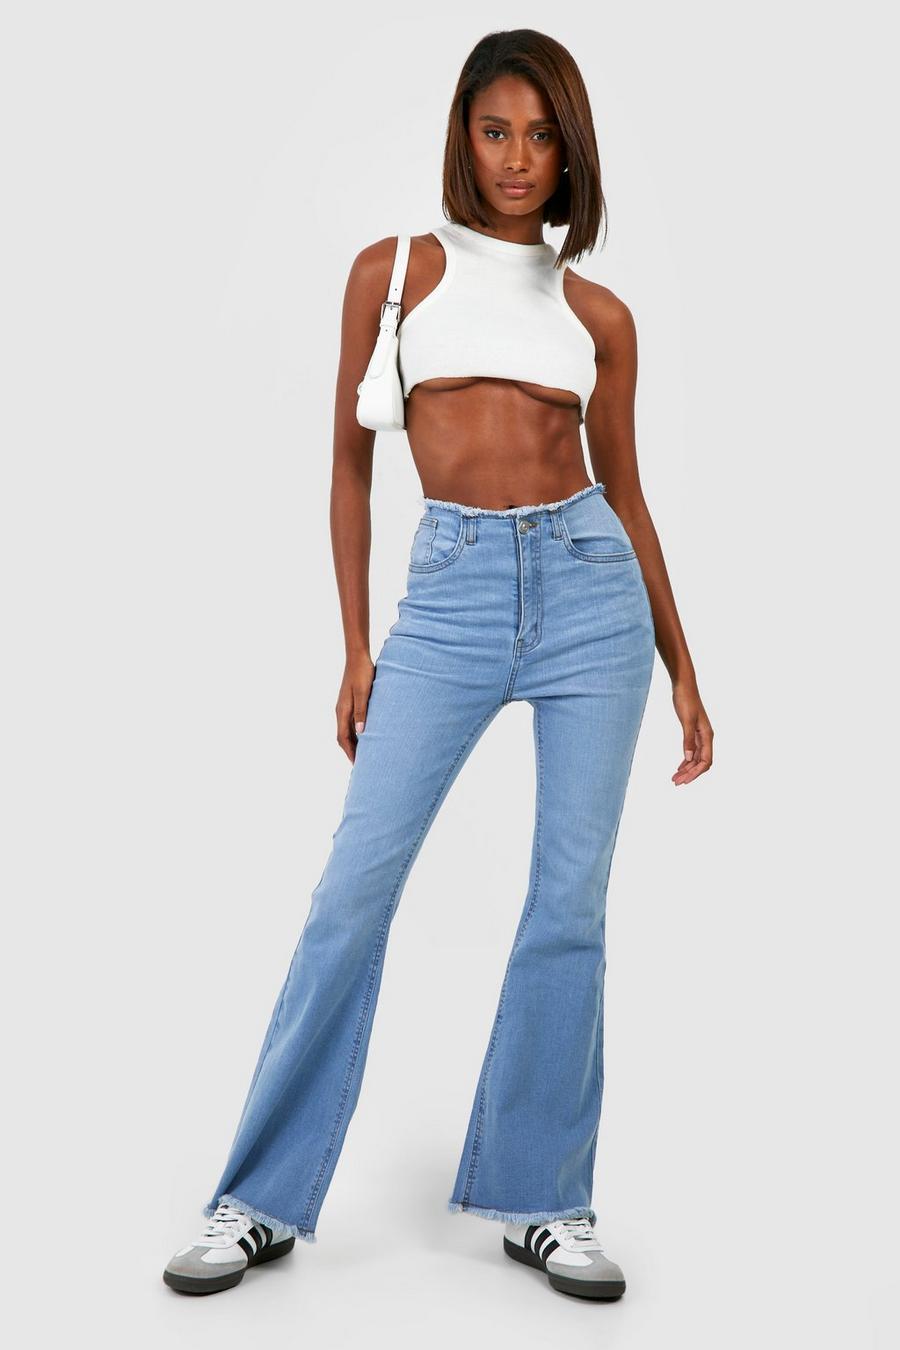 CXXQ Flare Jeans for Women Black Bell Bottom Jeans High Waisted